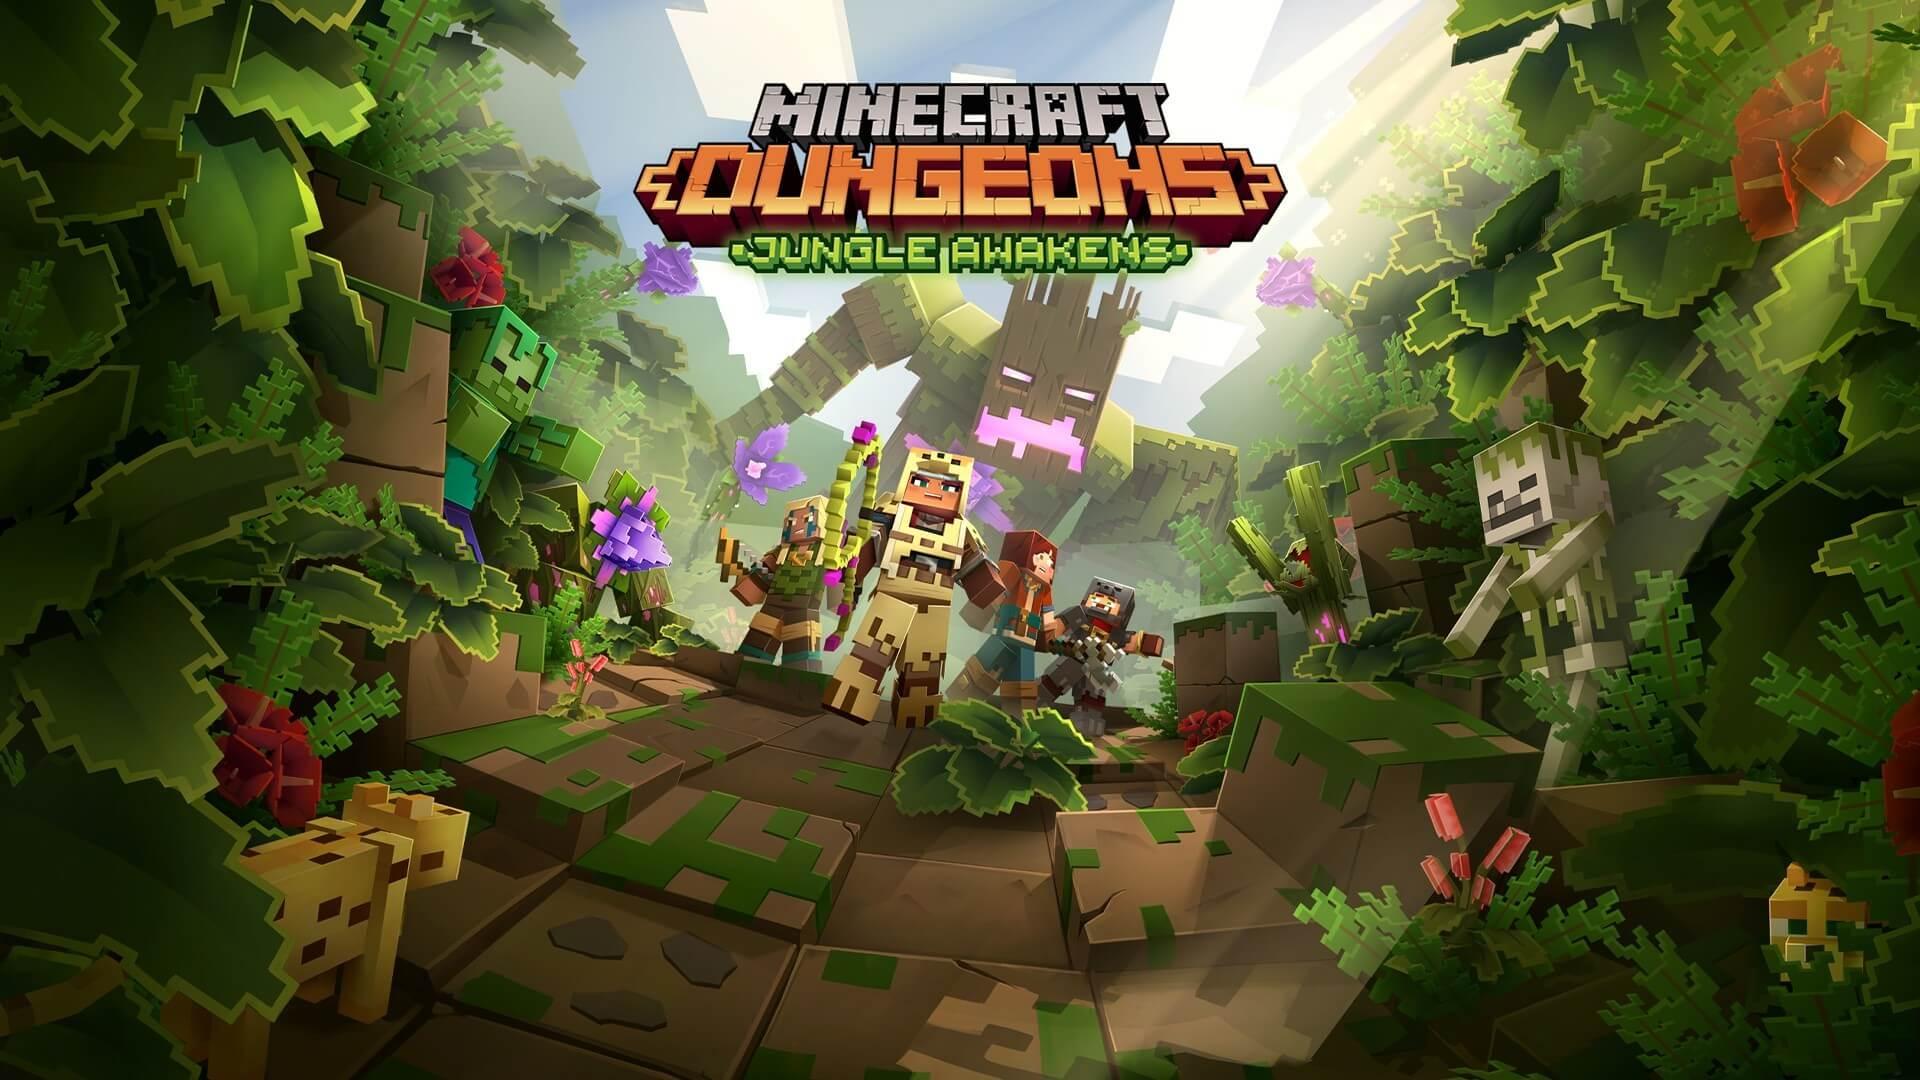 Mediaasset Minecraft Dungeons Jungle Awakens